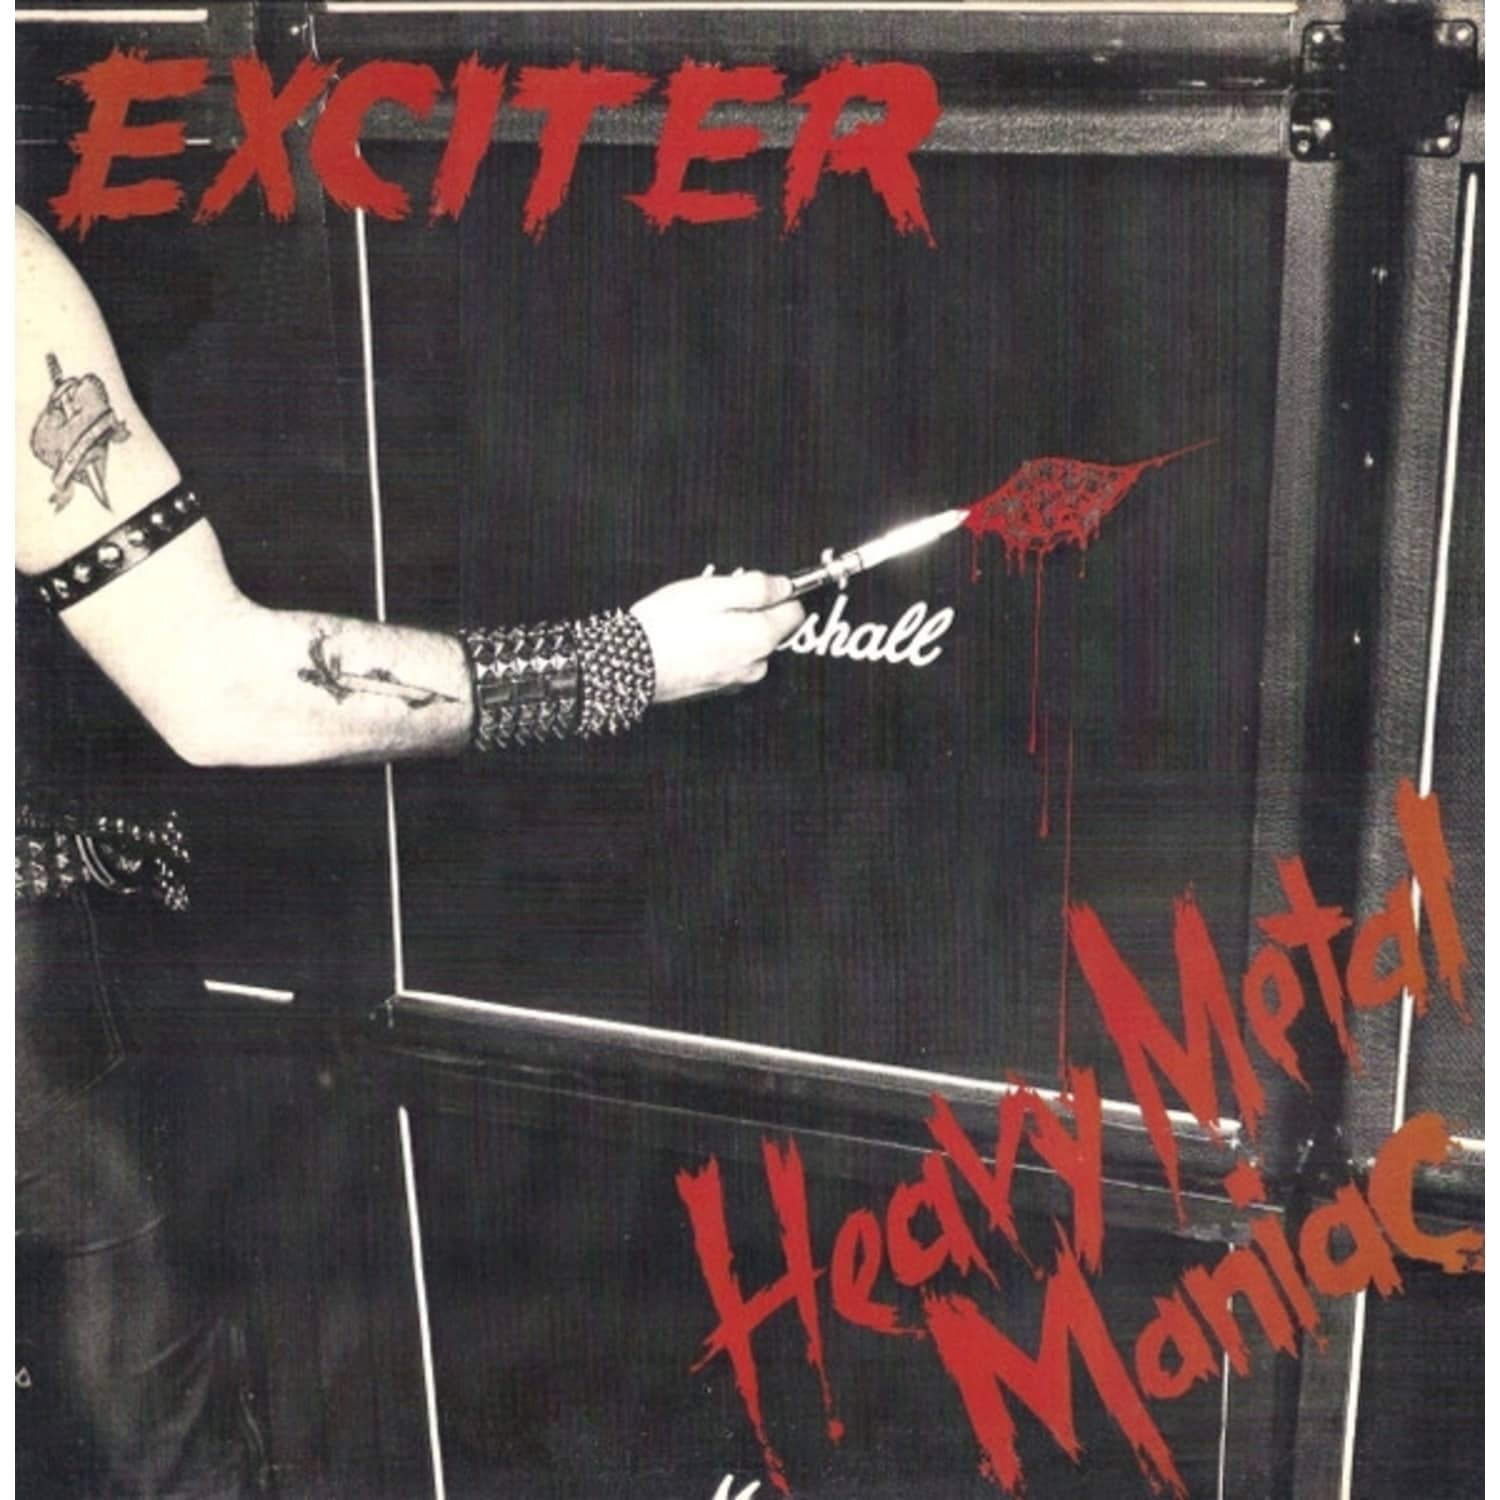 Exciter - HEAVY METAL MANIAC 